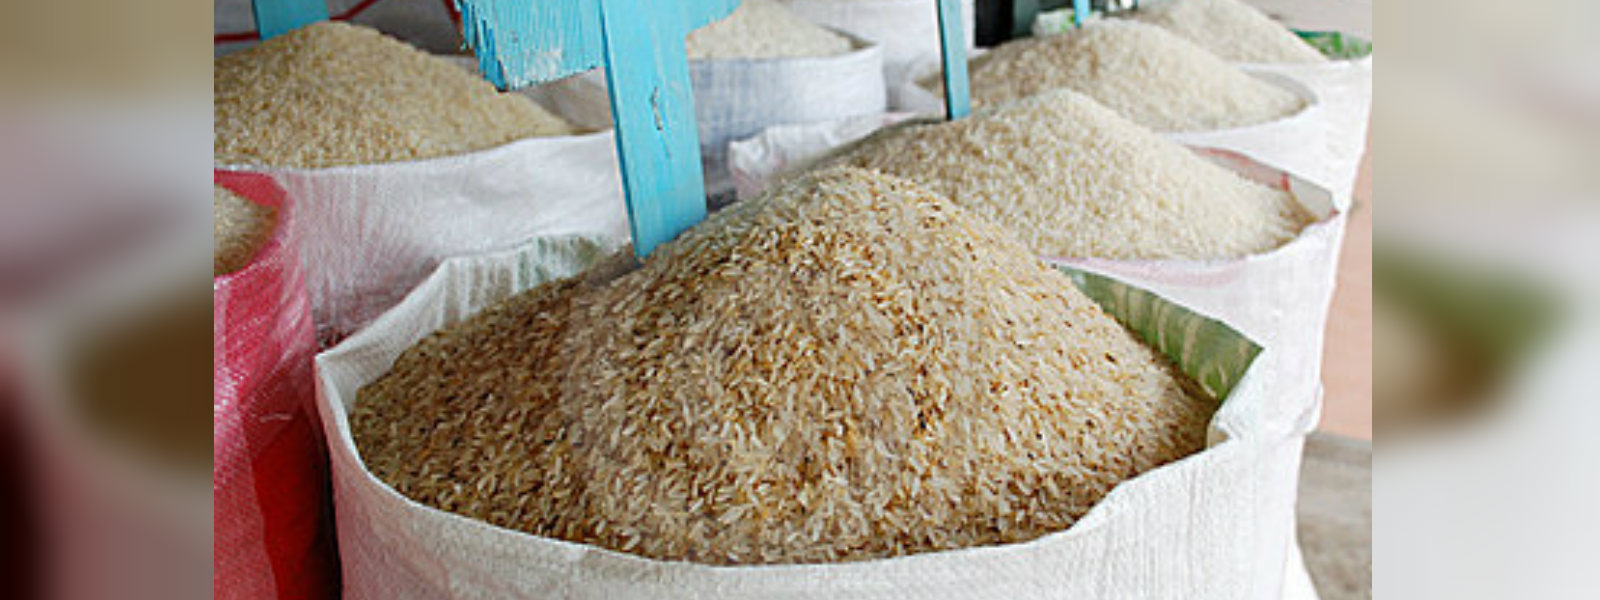 Legal action against 89 rice vendors